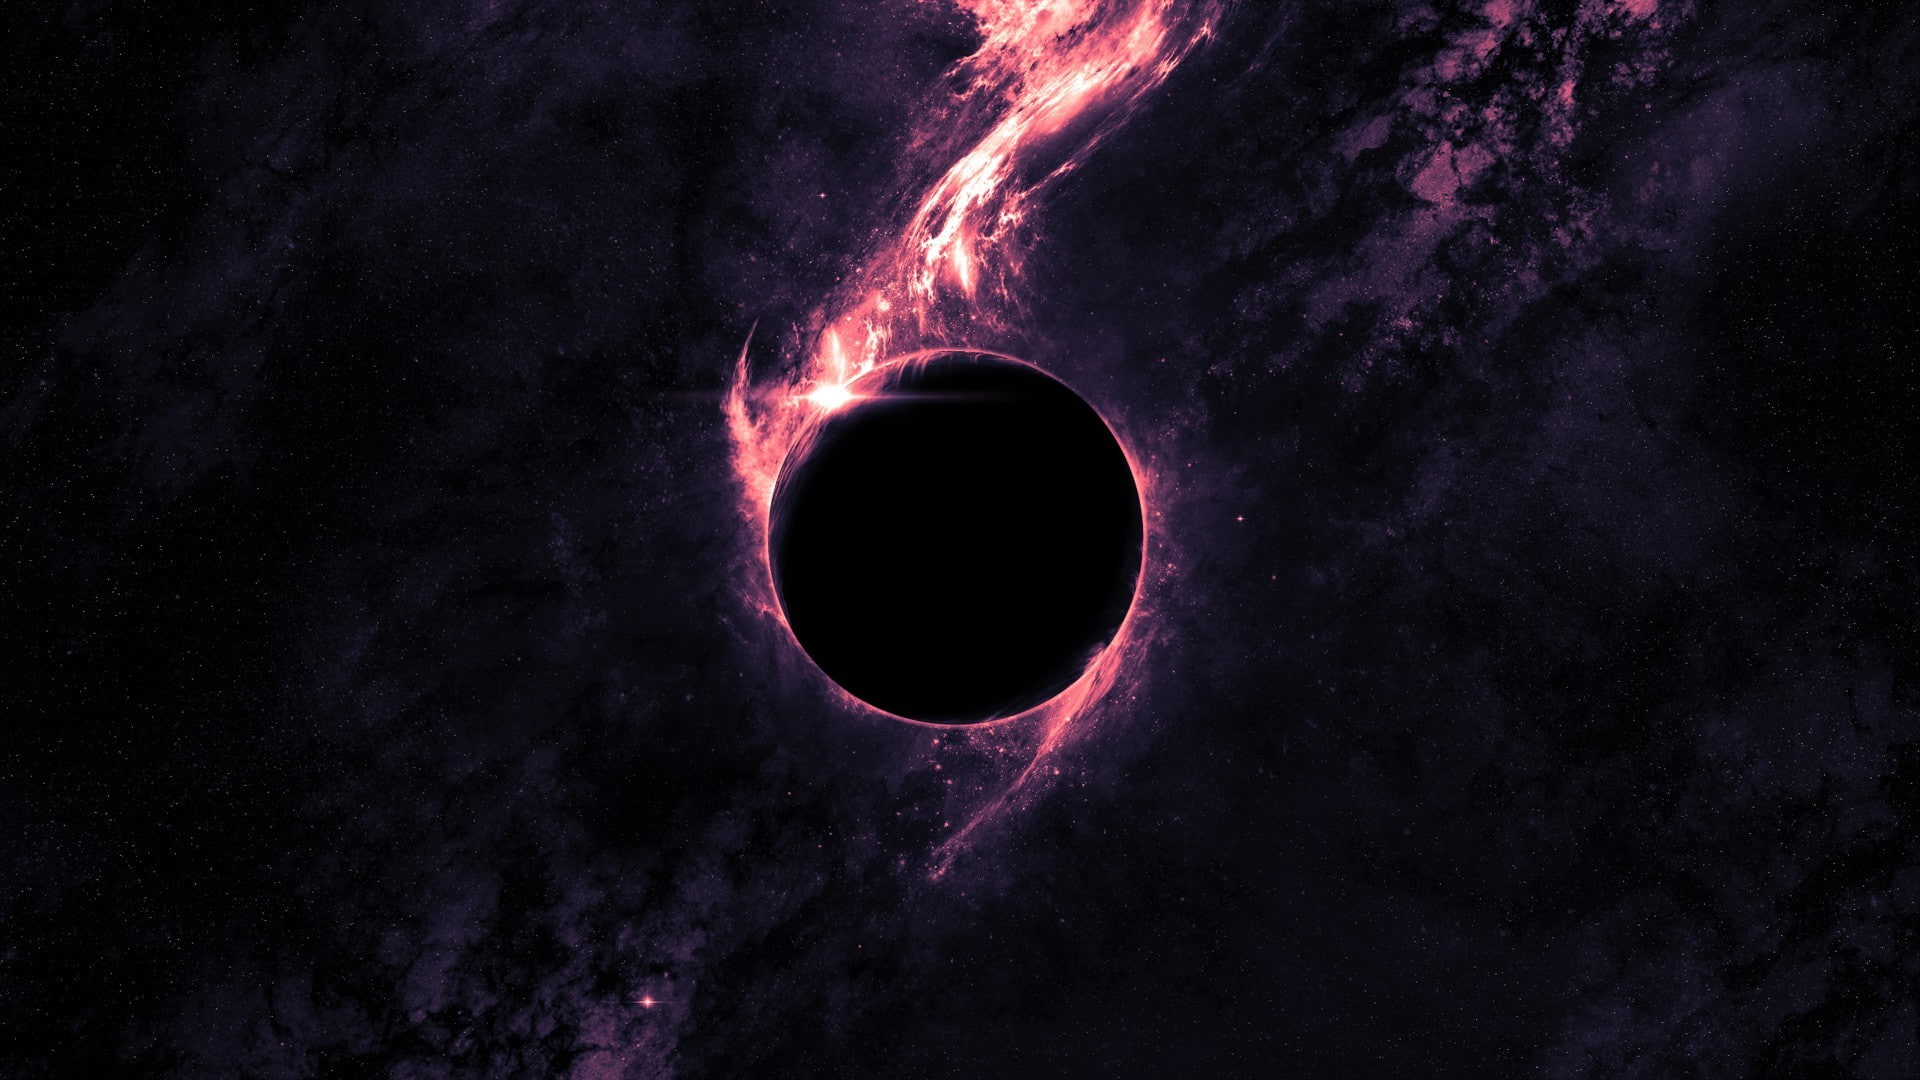 dark, black holes, artwork, space, planet, abstract, purple